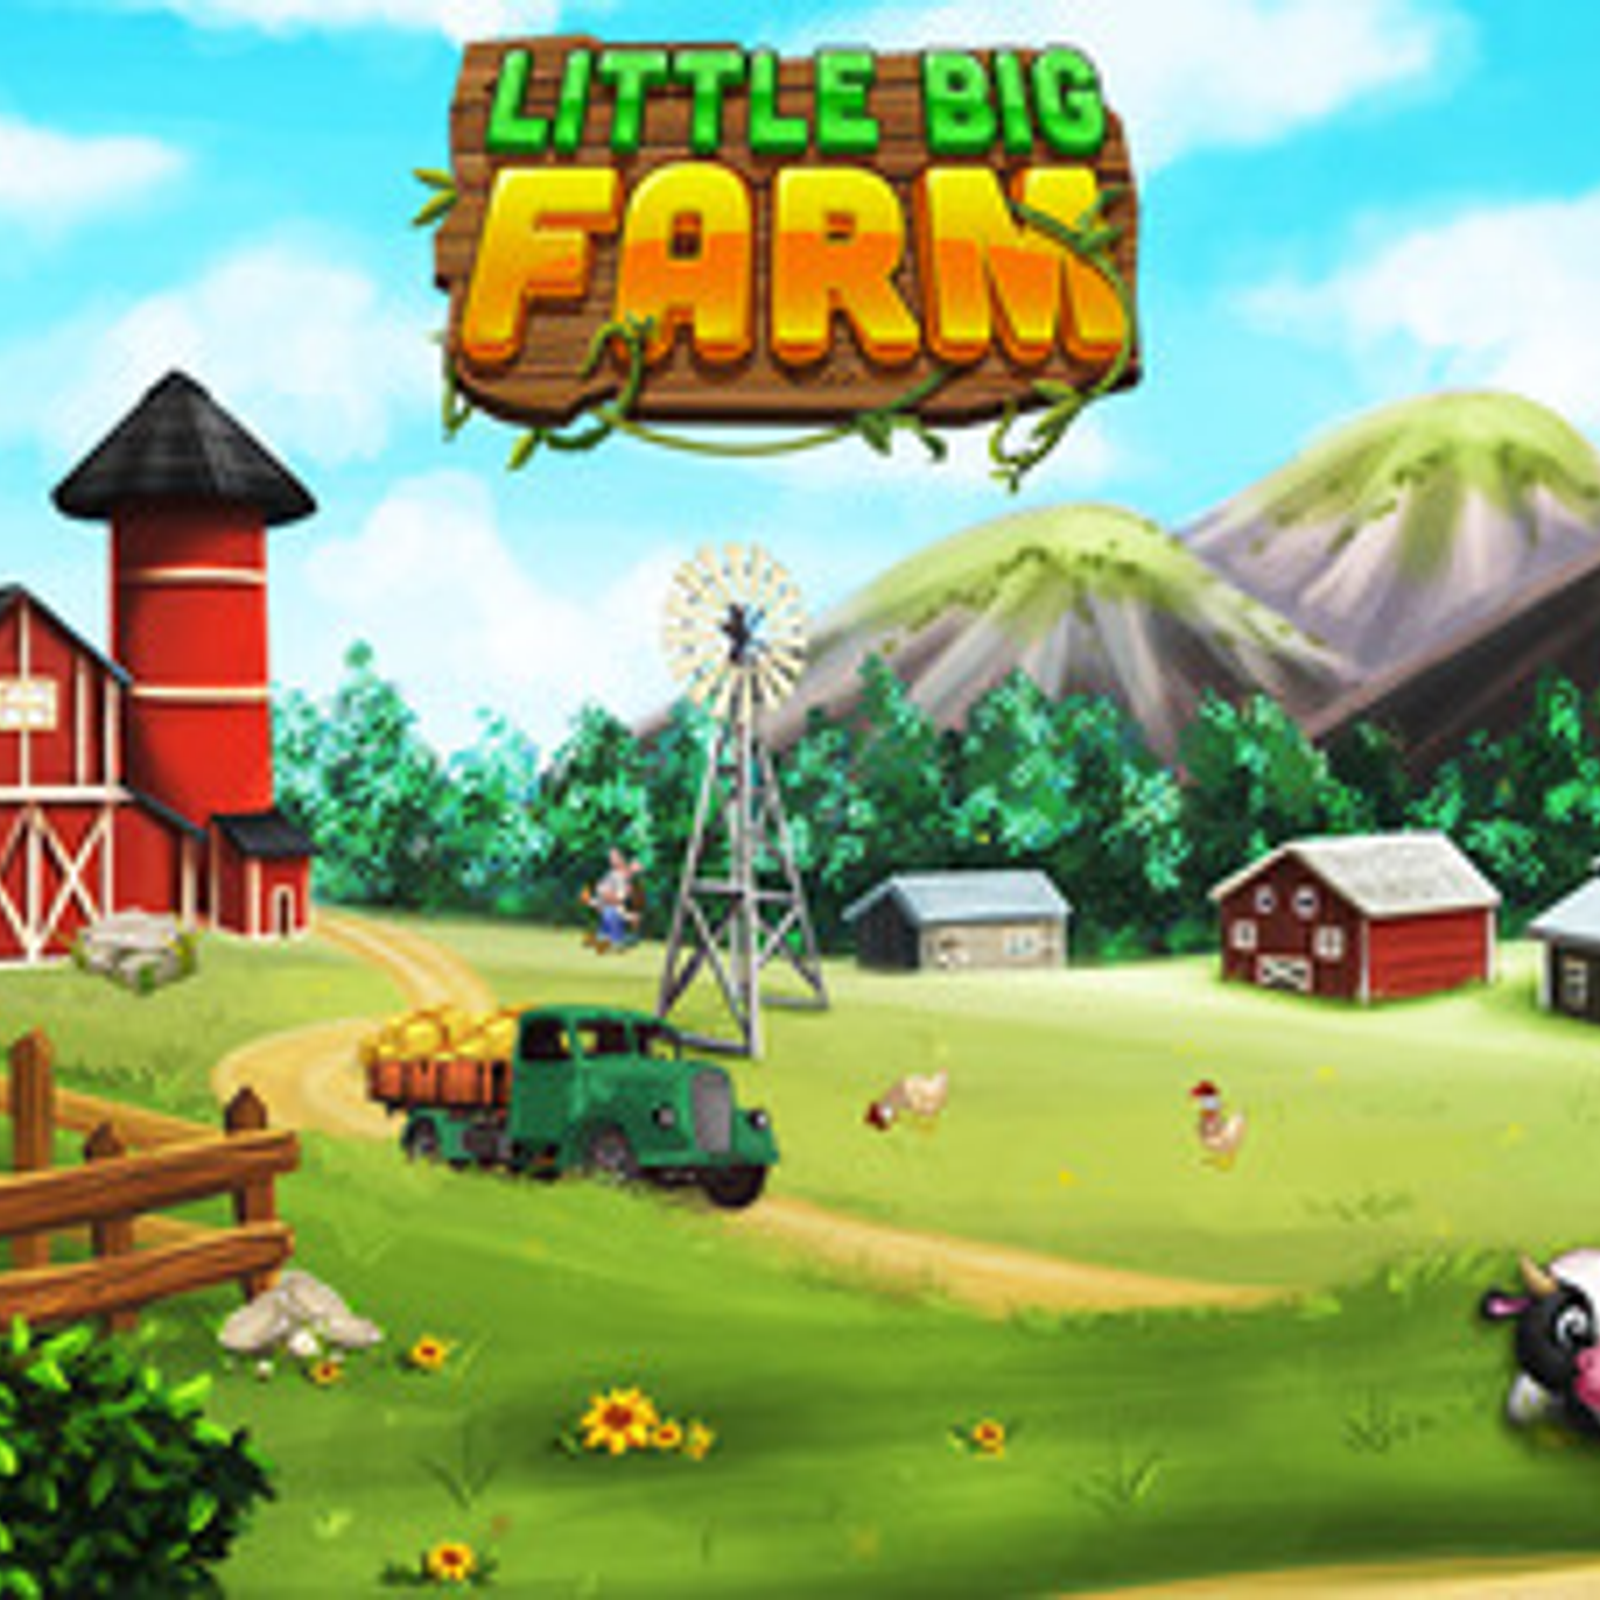 Игры фермы 7. Игра ферма Farm. ПК "на ферме". Ферма игра мельница. Игра ферма Томпсон.